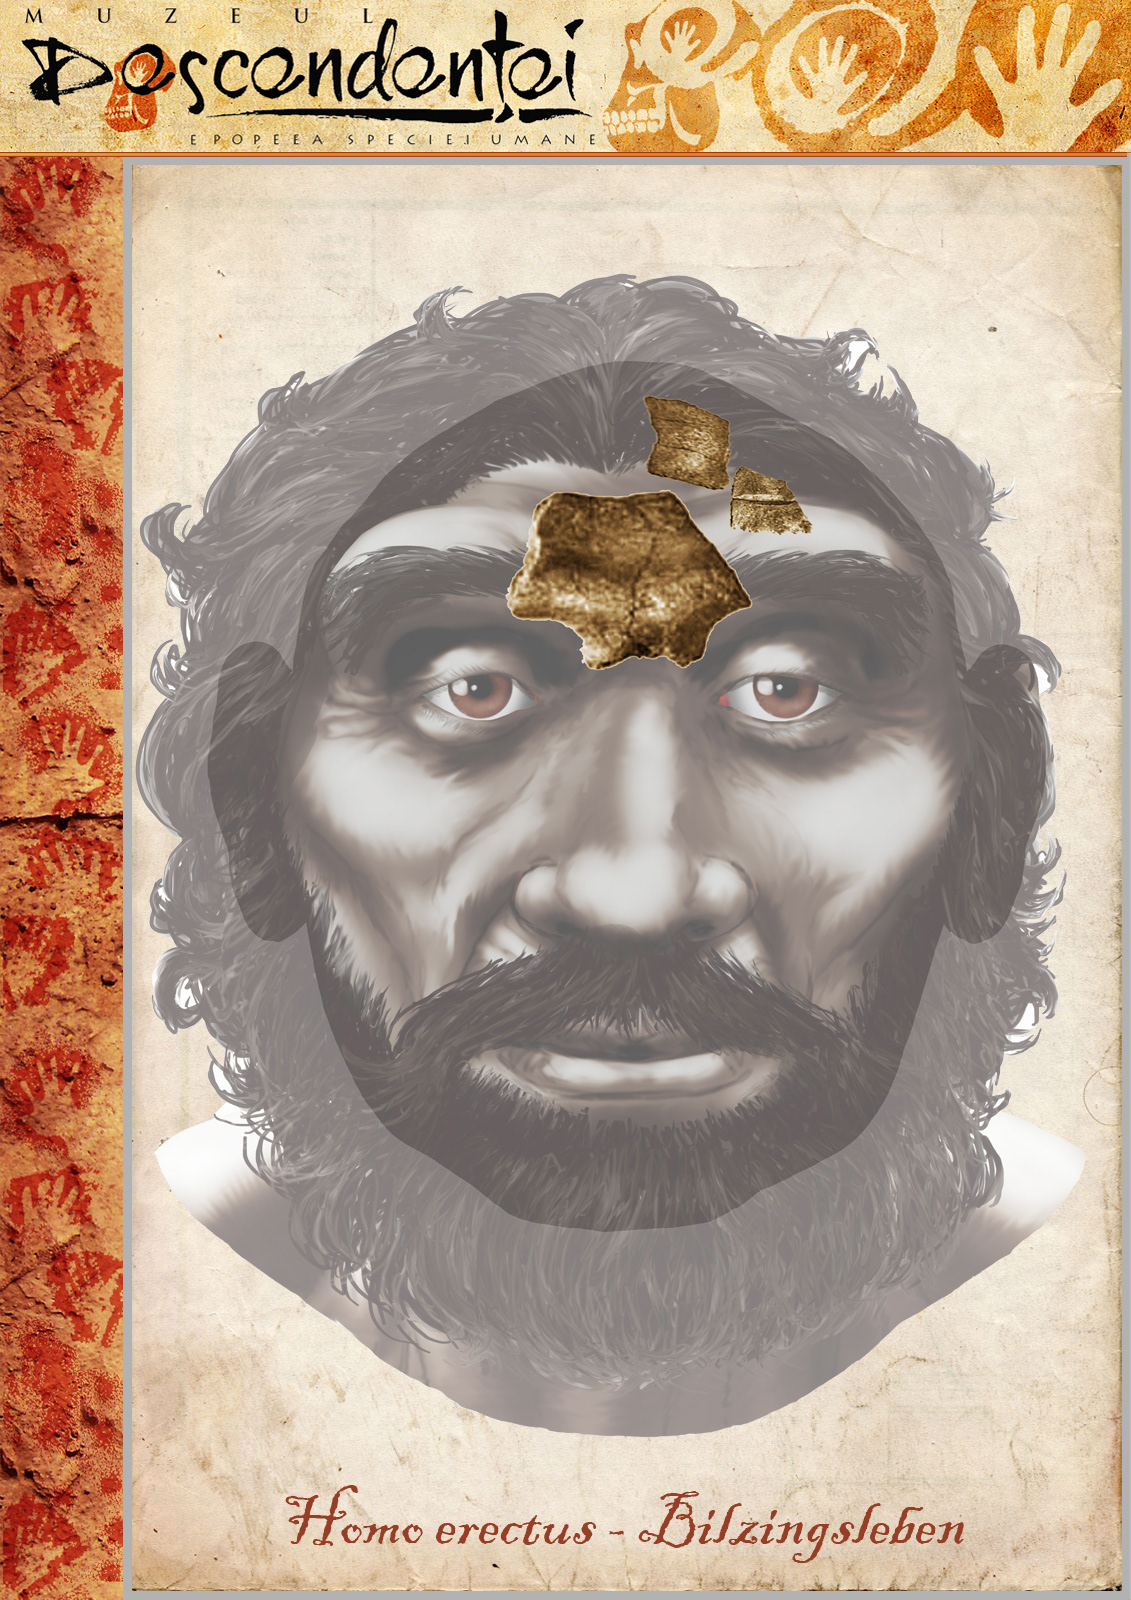 Homo erectus - Bilzingsleben human evolution neanderthal ergaster sahelanthropus ardipithecus kenyanthropus australopithecus habilis heidelbergensis cro-magnon afarensis paranthropus